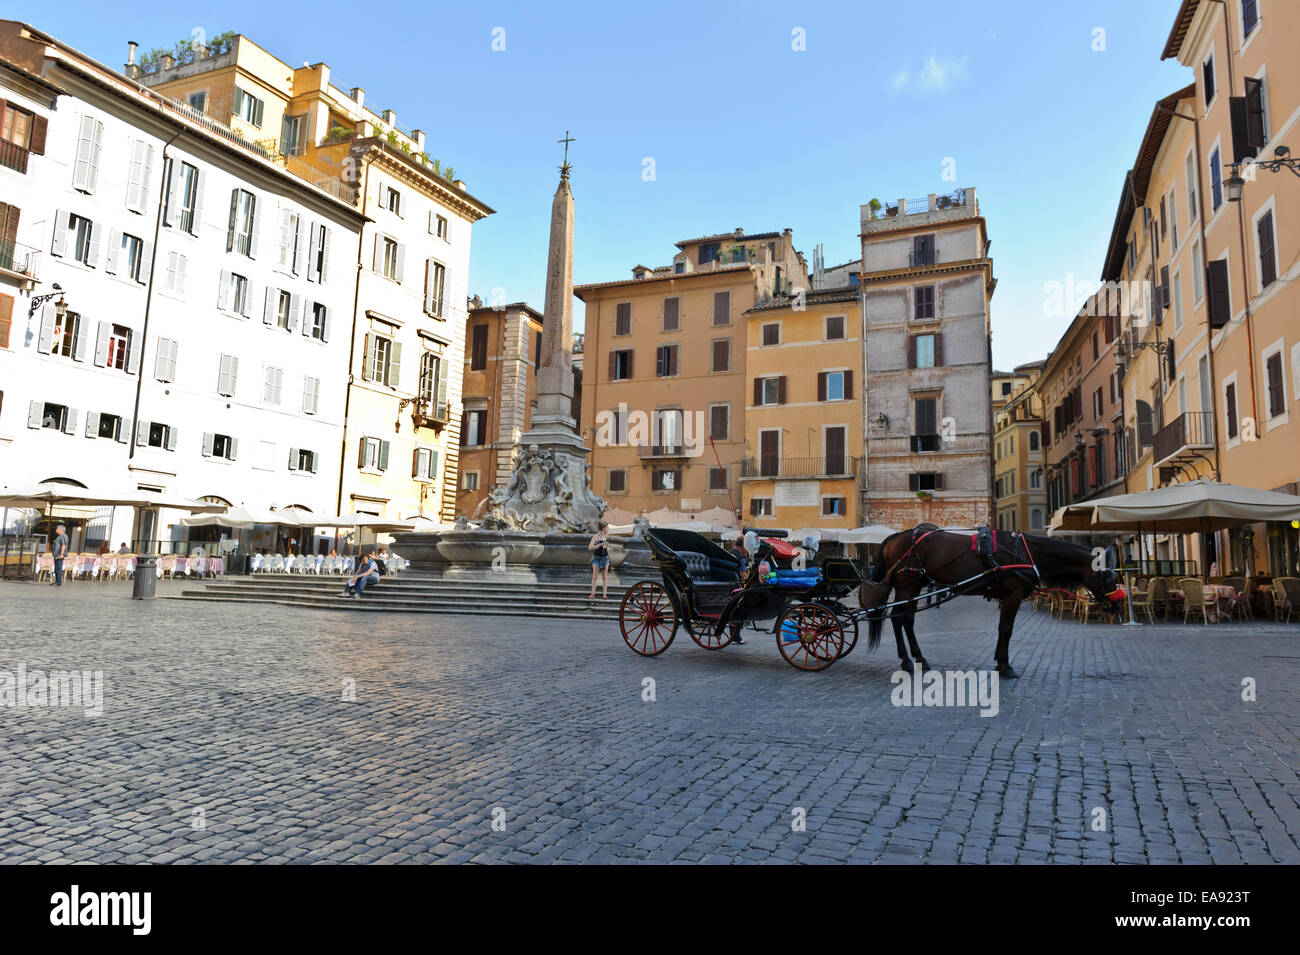 Am frühen Morgen Aktivitäten in der Piazza Della Rotonda in Rom, Italien. Stockfoto